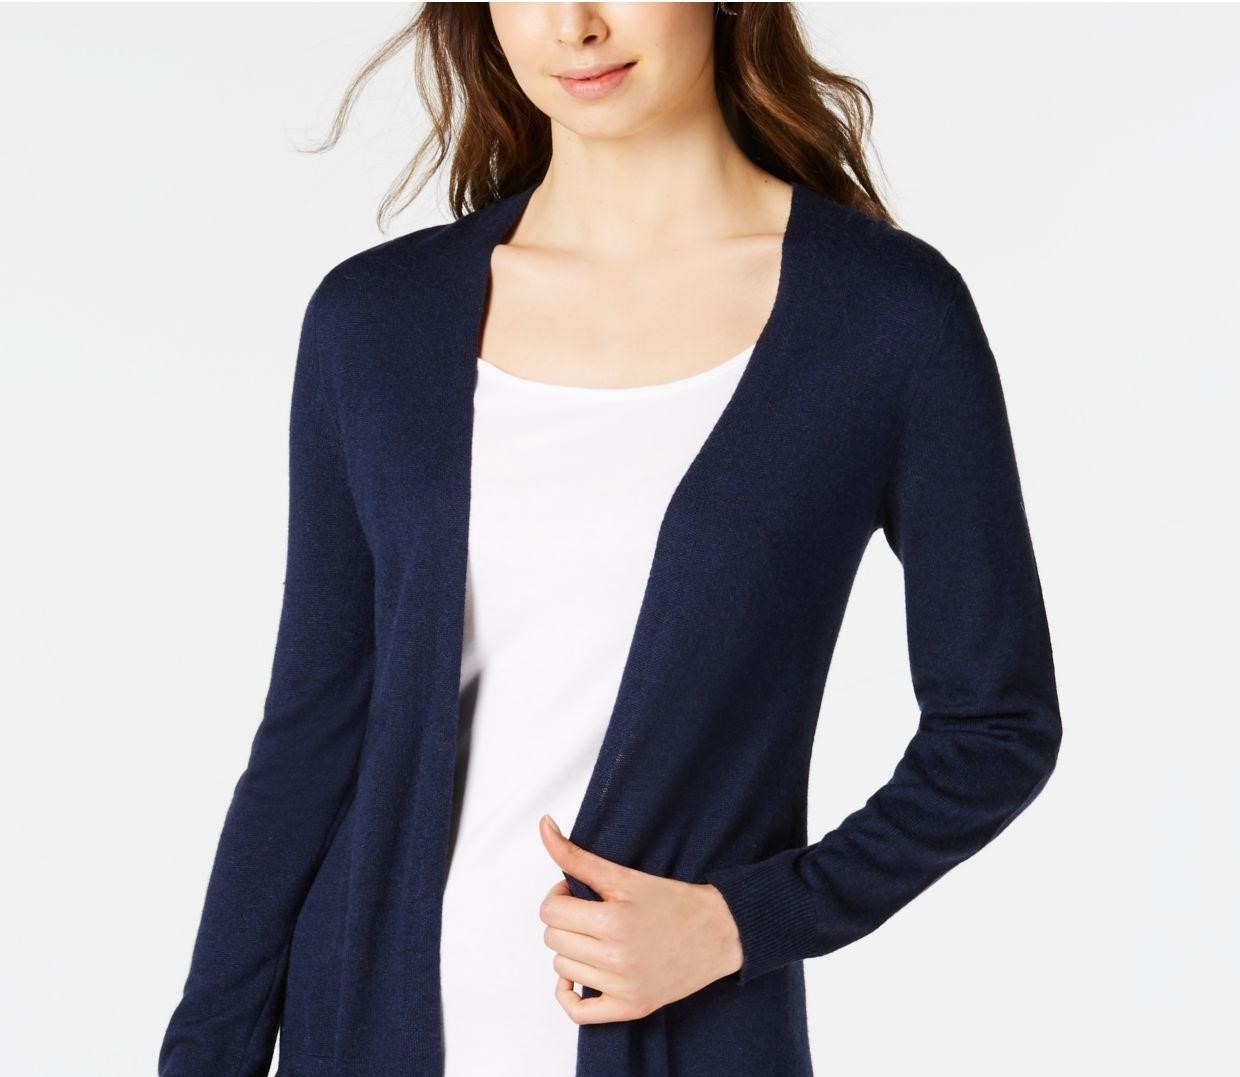 Maison Jules Women's Open-Front Cardigan Sweater Blue Size X-Small